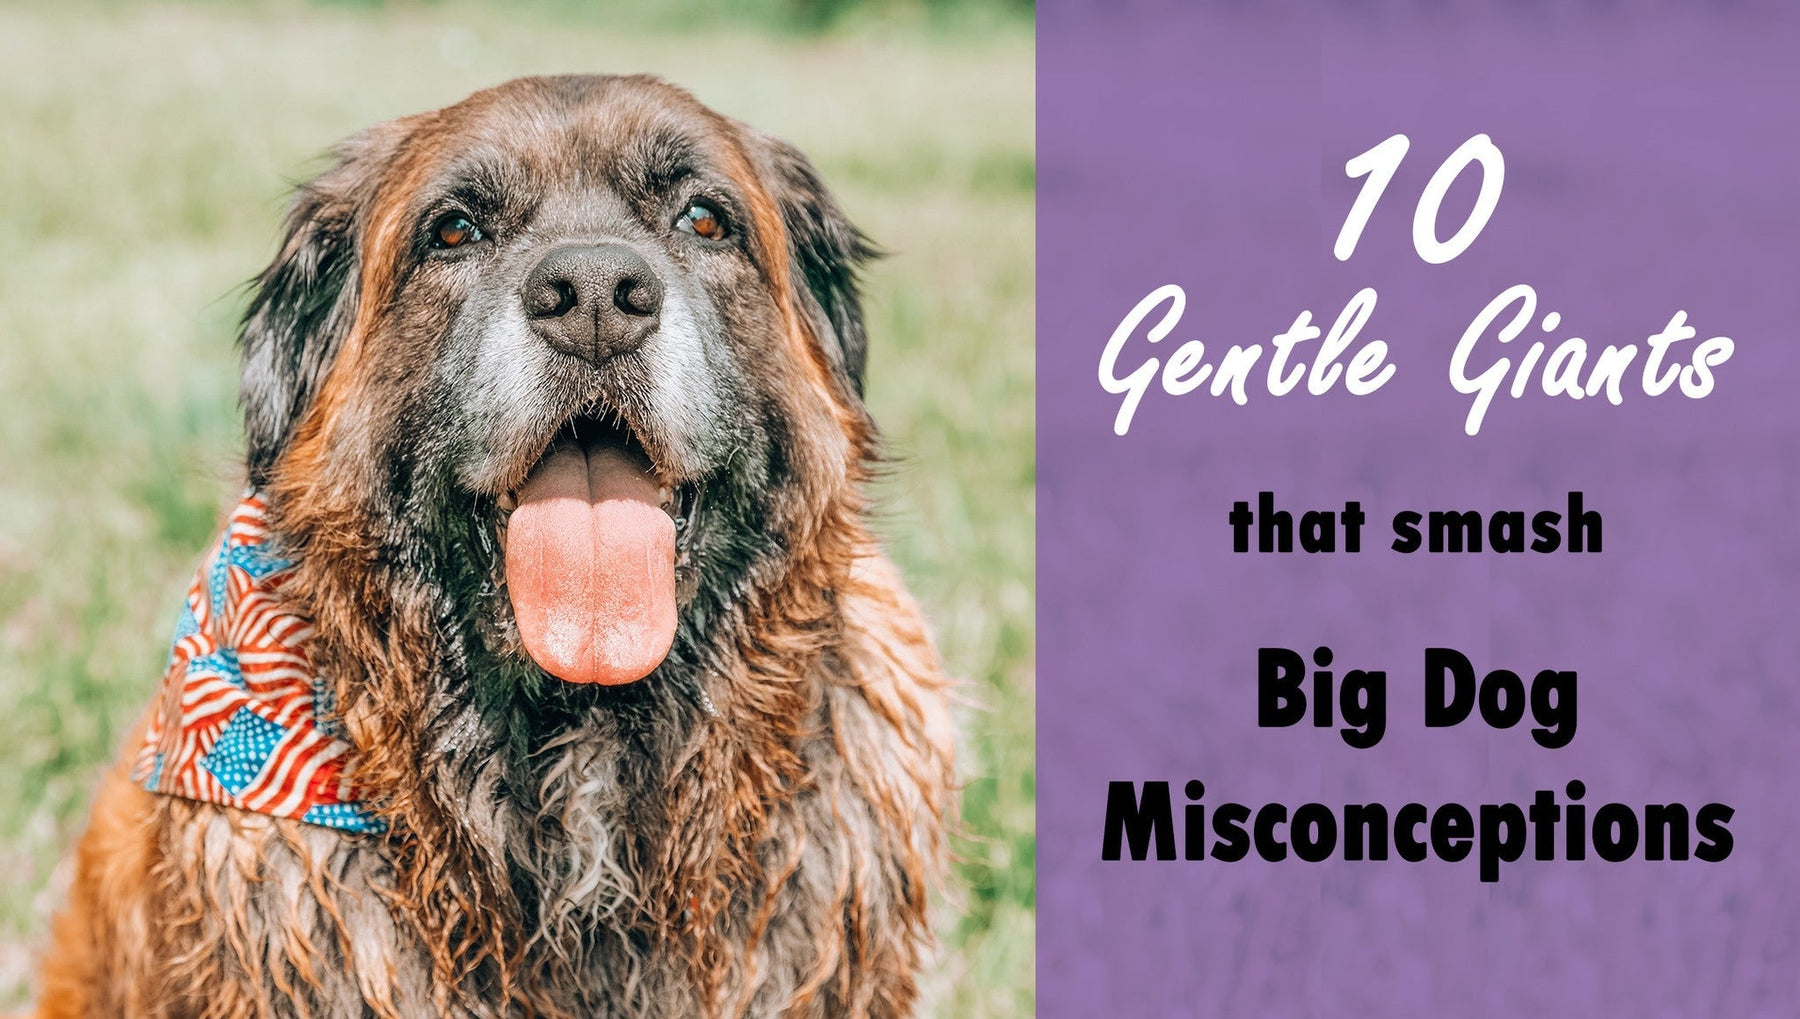 Saint Bernard large dog